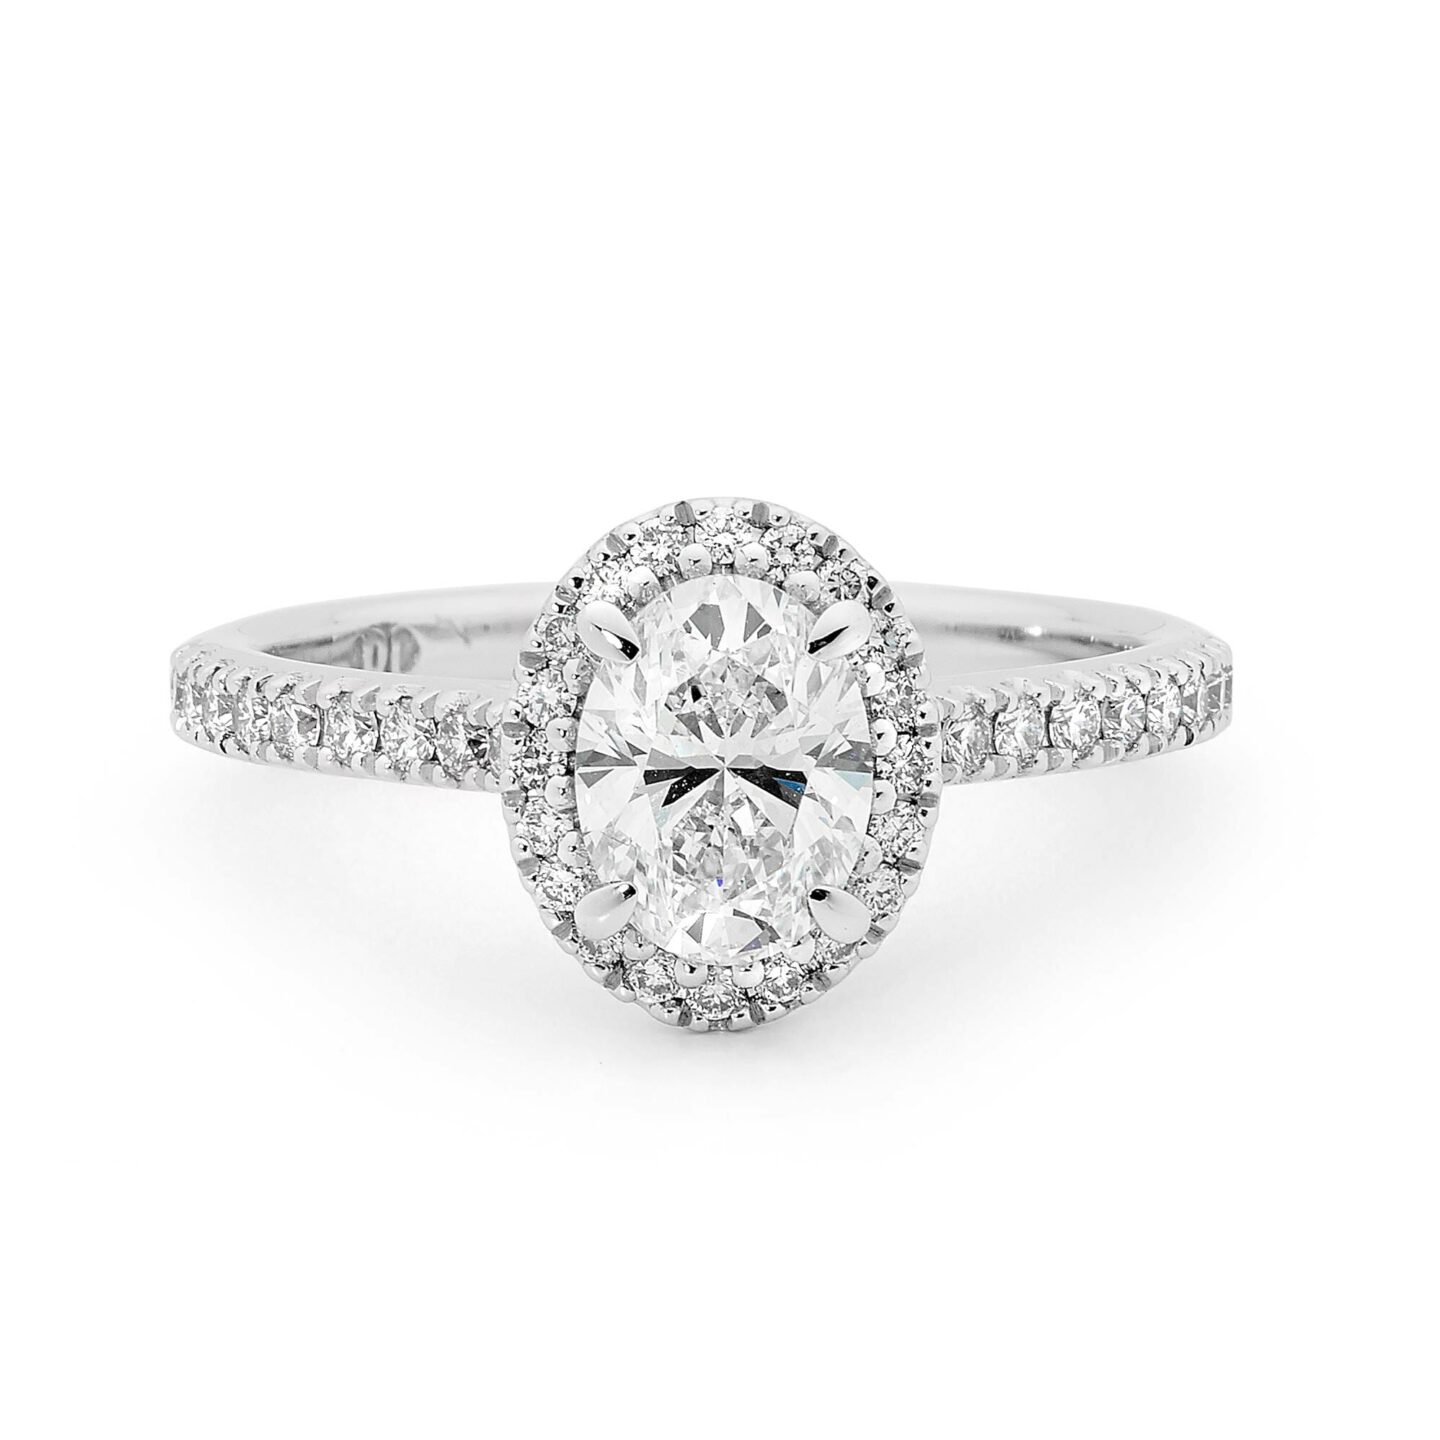 Estelle – Oval Cut Diamond Engagement Ring